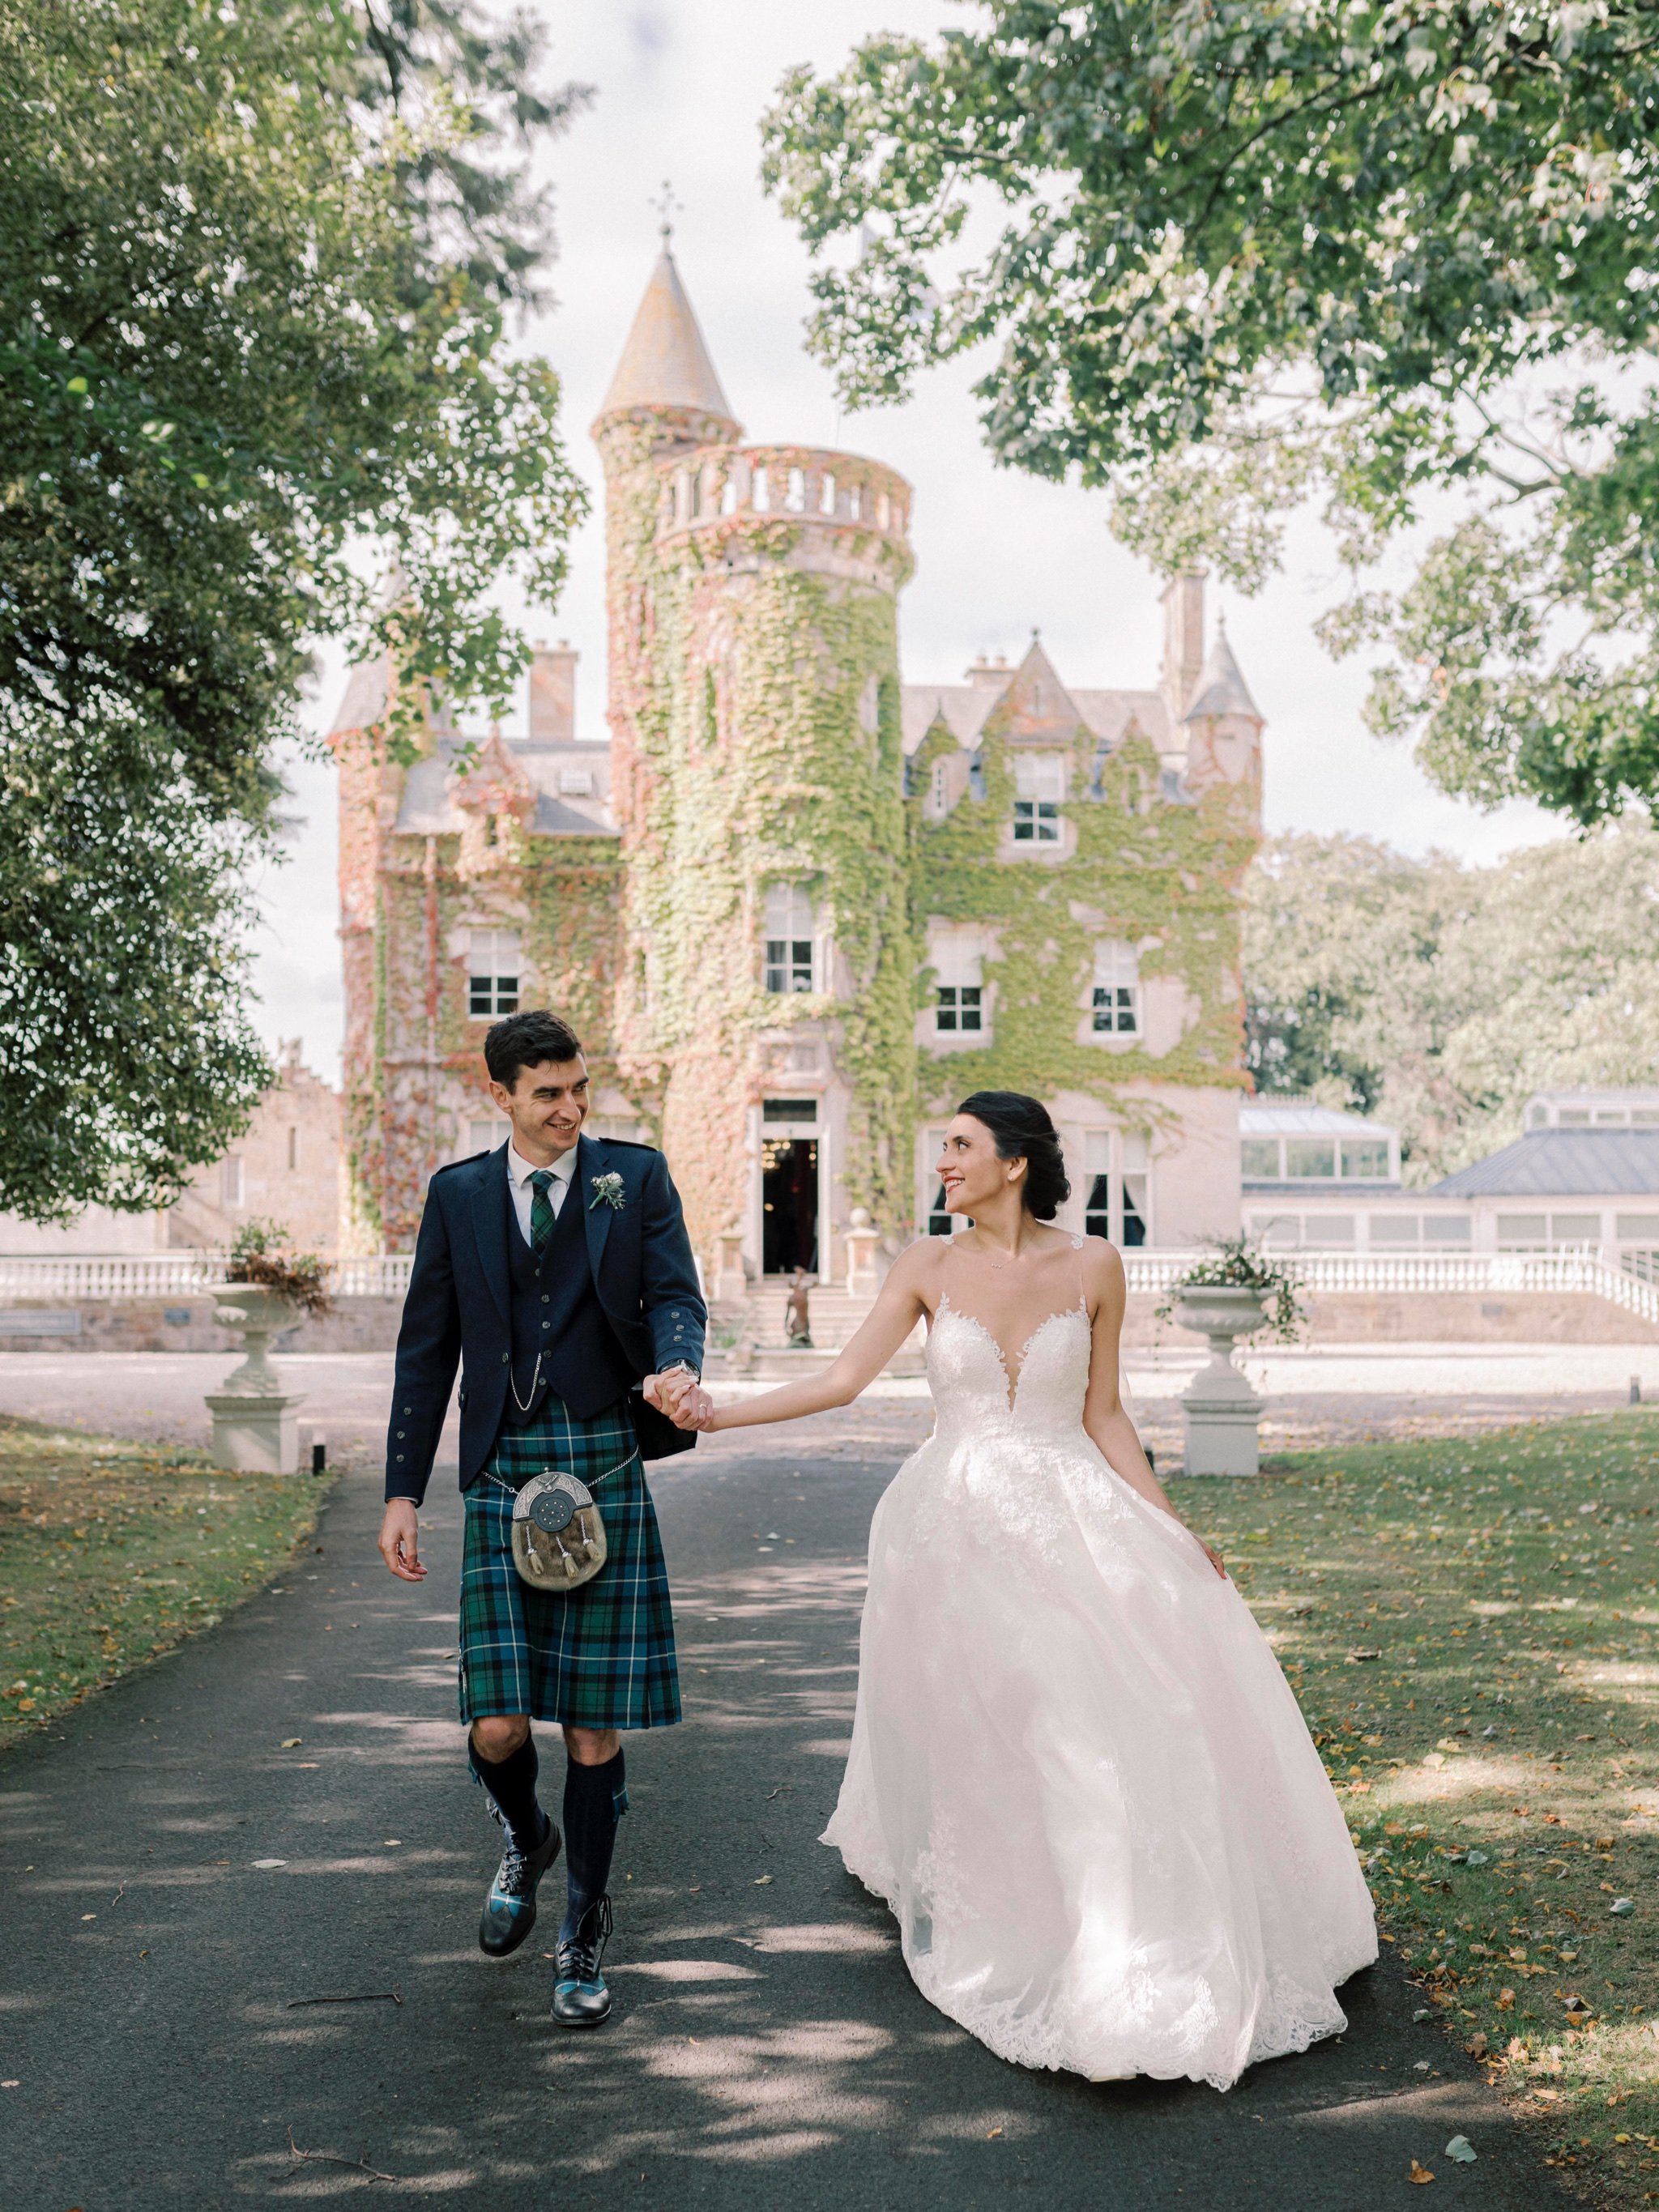 20_carlowrie castle edinburgh wedding photographer bride and groom walking away from castle.jpg